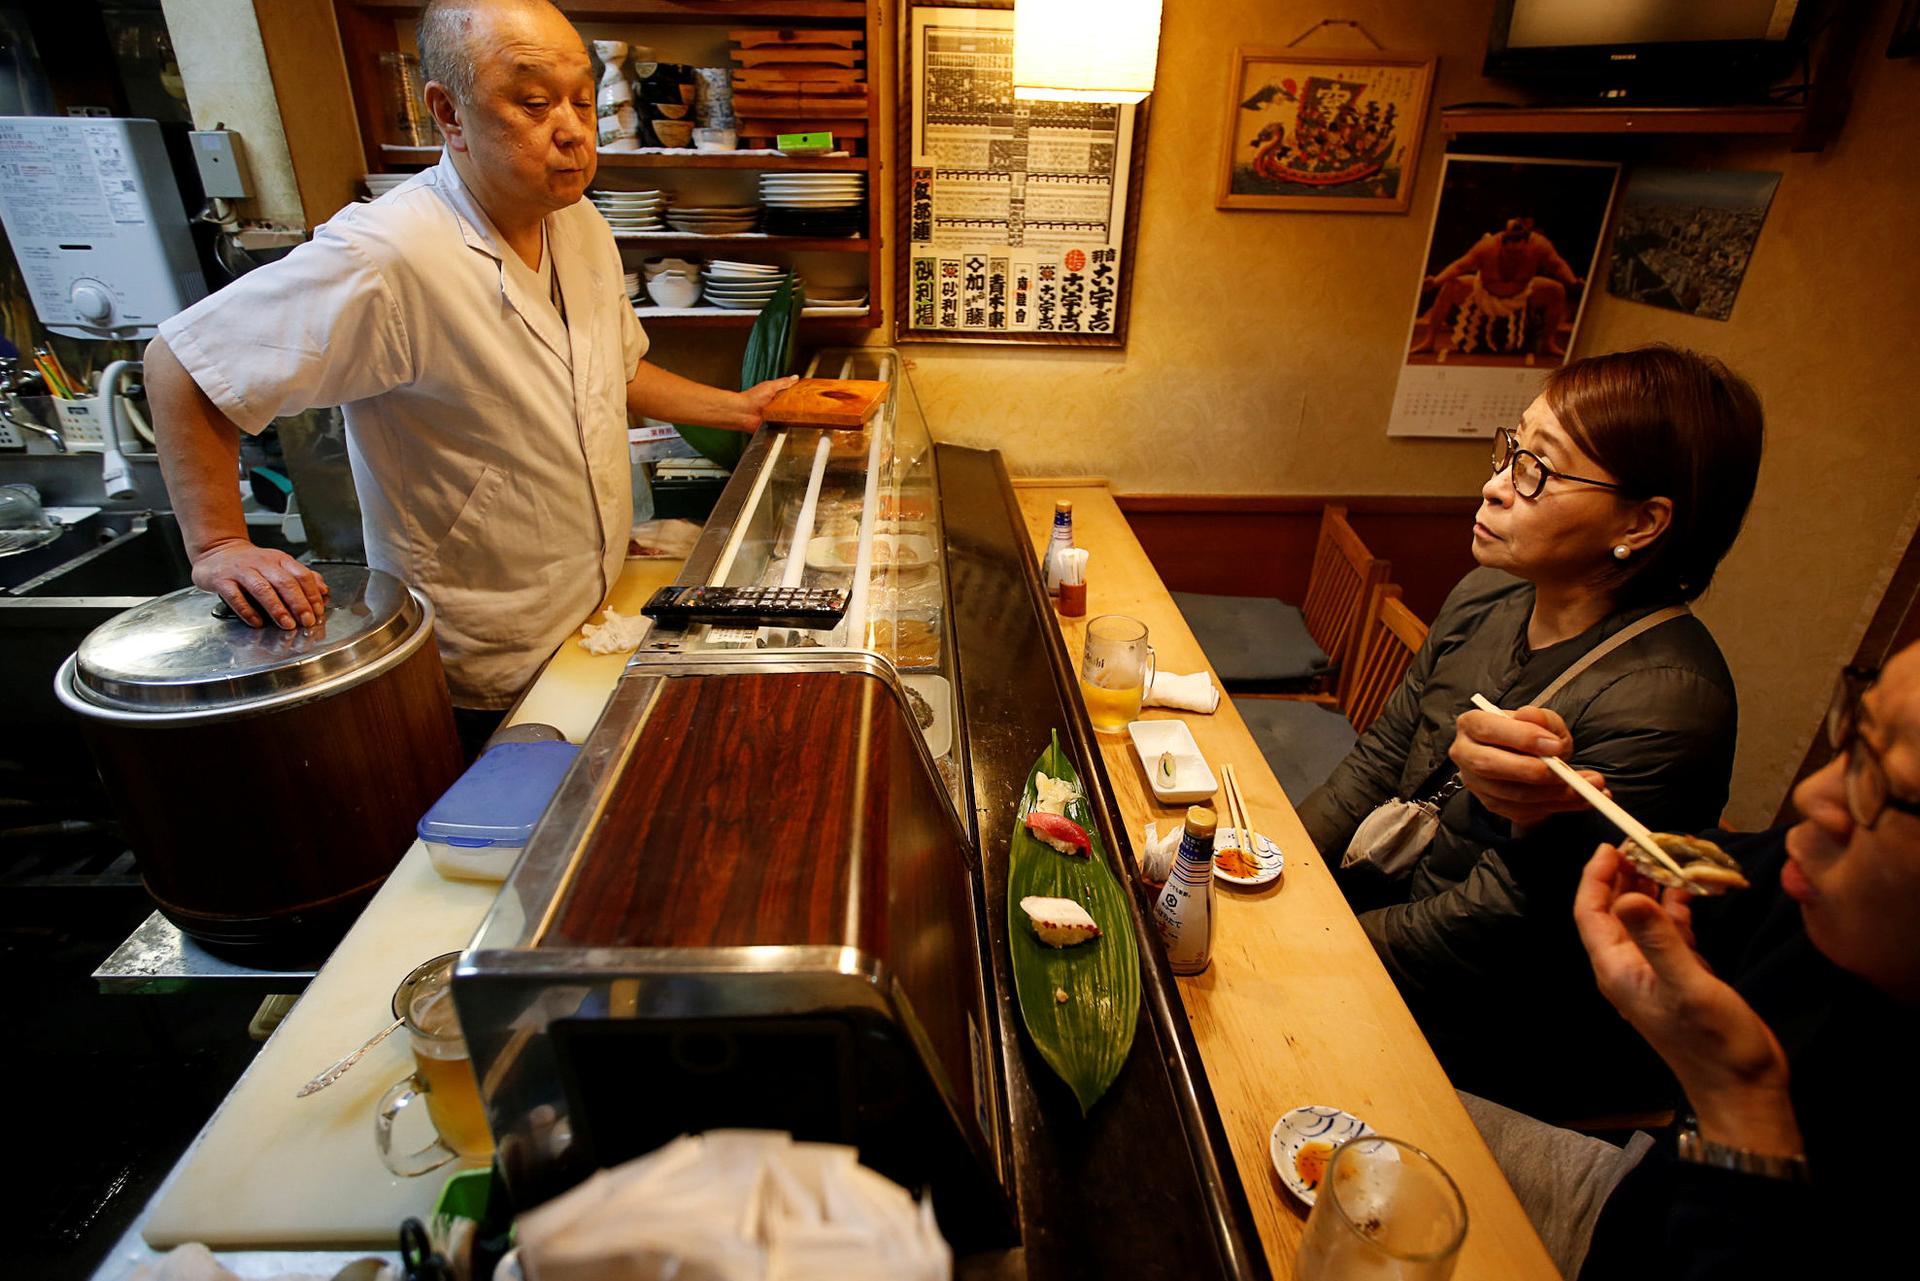 Chef chats with customers at sushi bar.